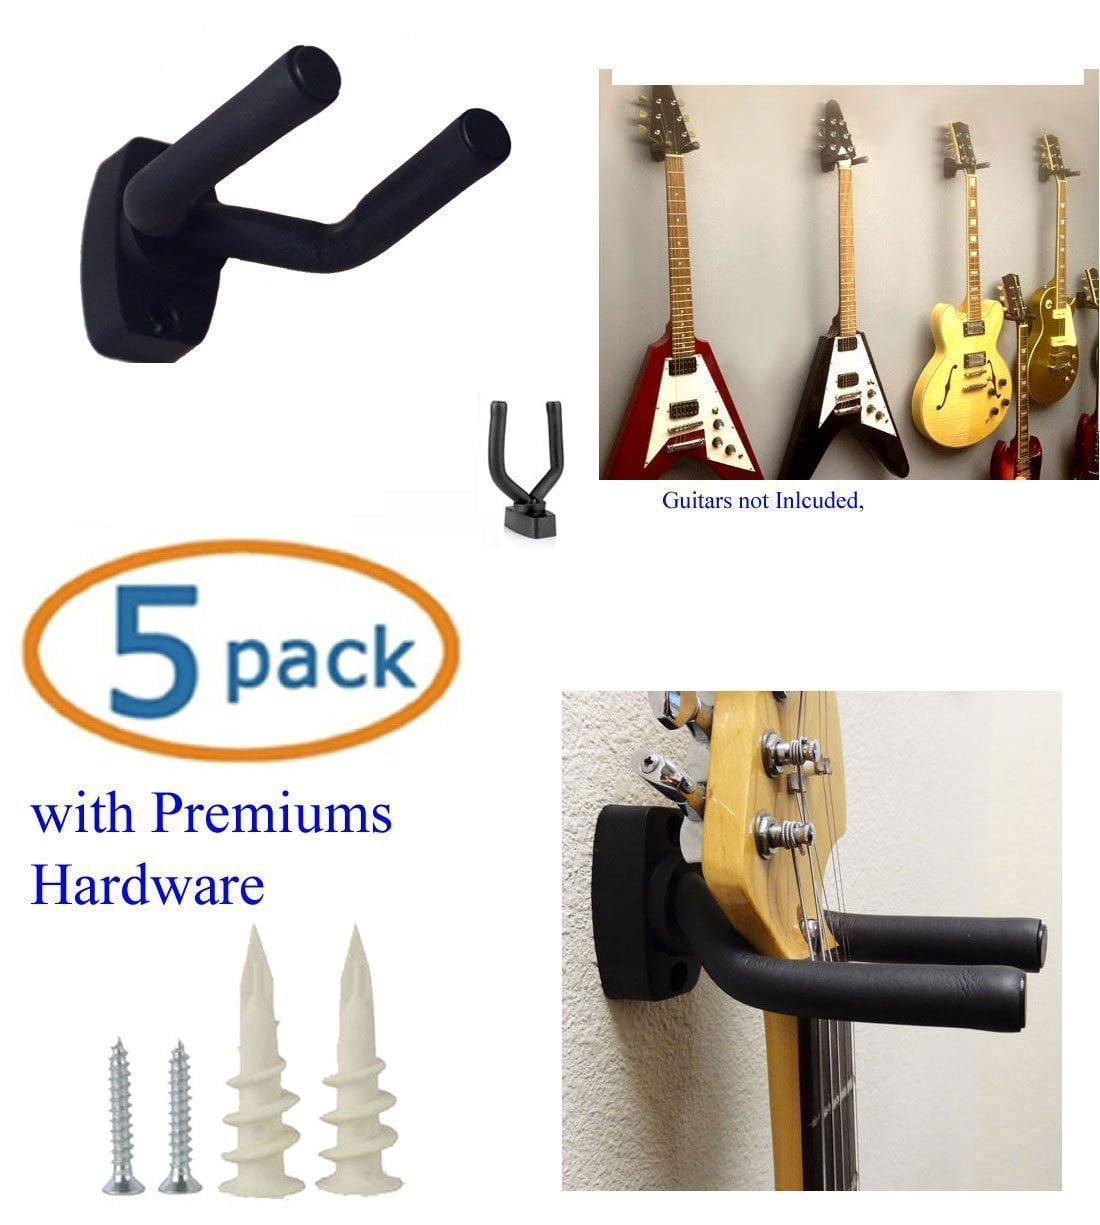 Bass Easy To Install Guitar Hanger Wall Hook Holder Stand Black Display with Screws Mandolin Fits All Size Guitars Banjo Guitar Wall Mount Hanger 6 Pack Ukulele 